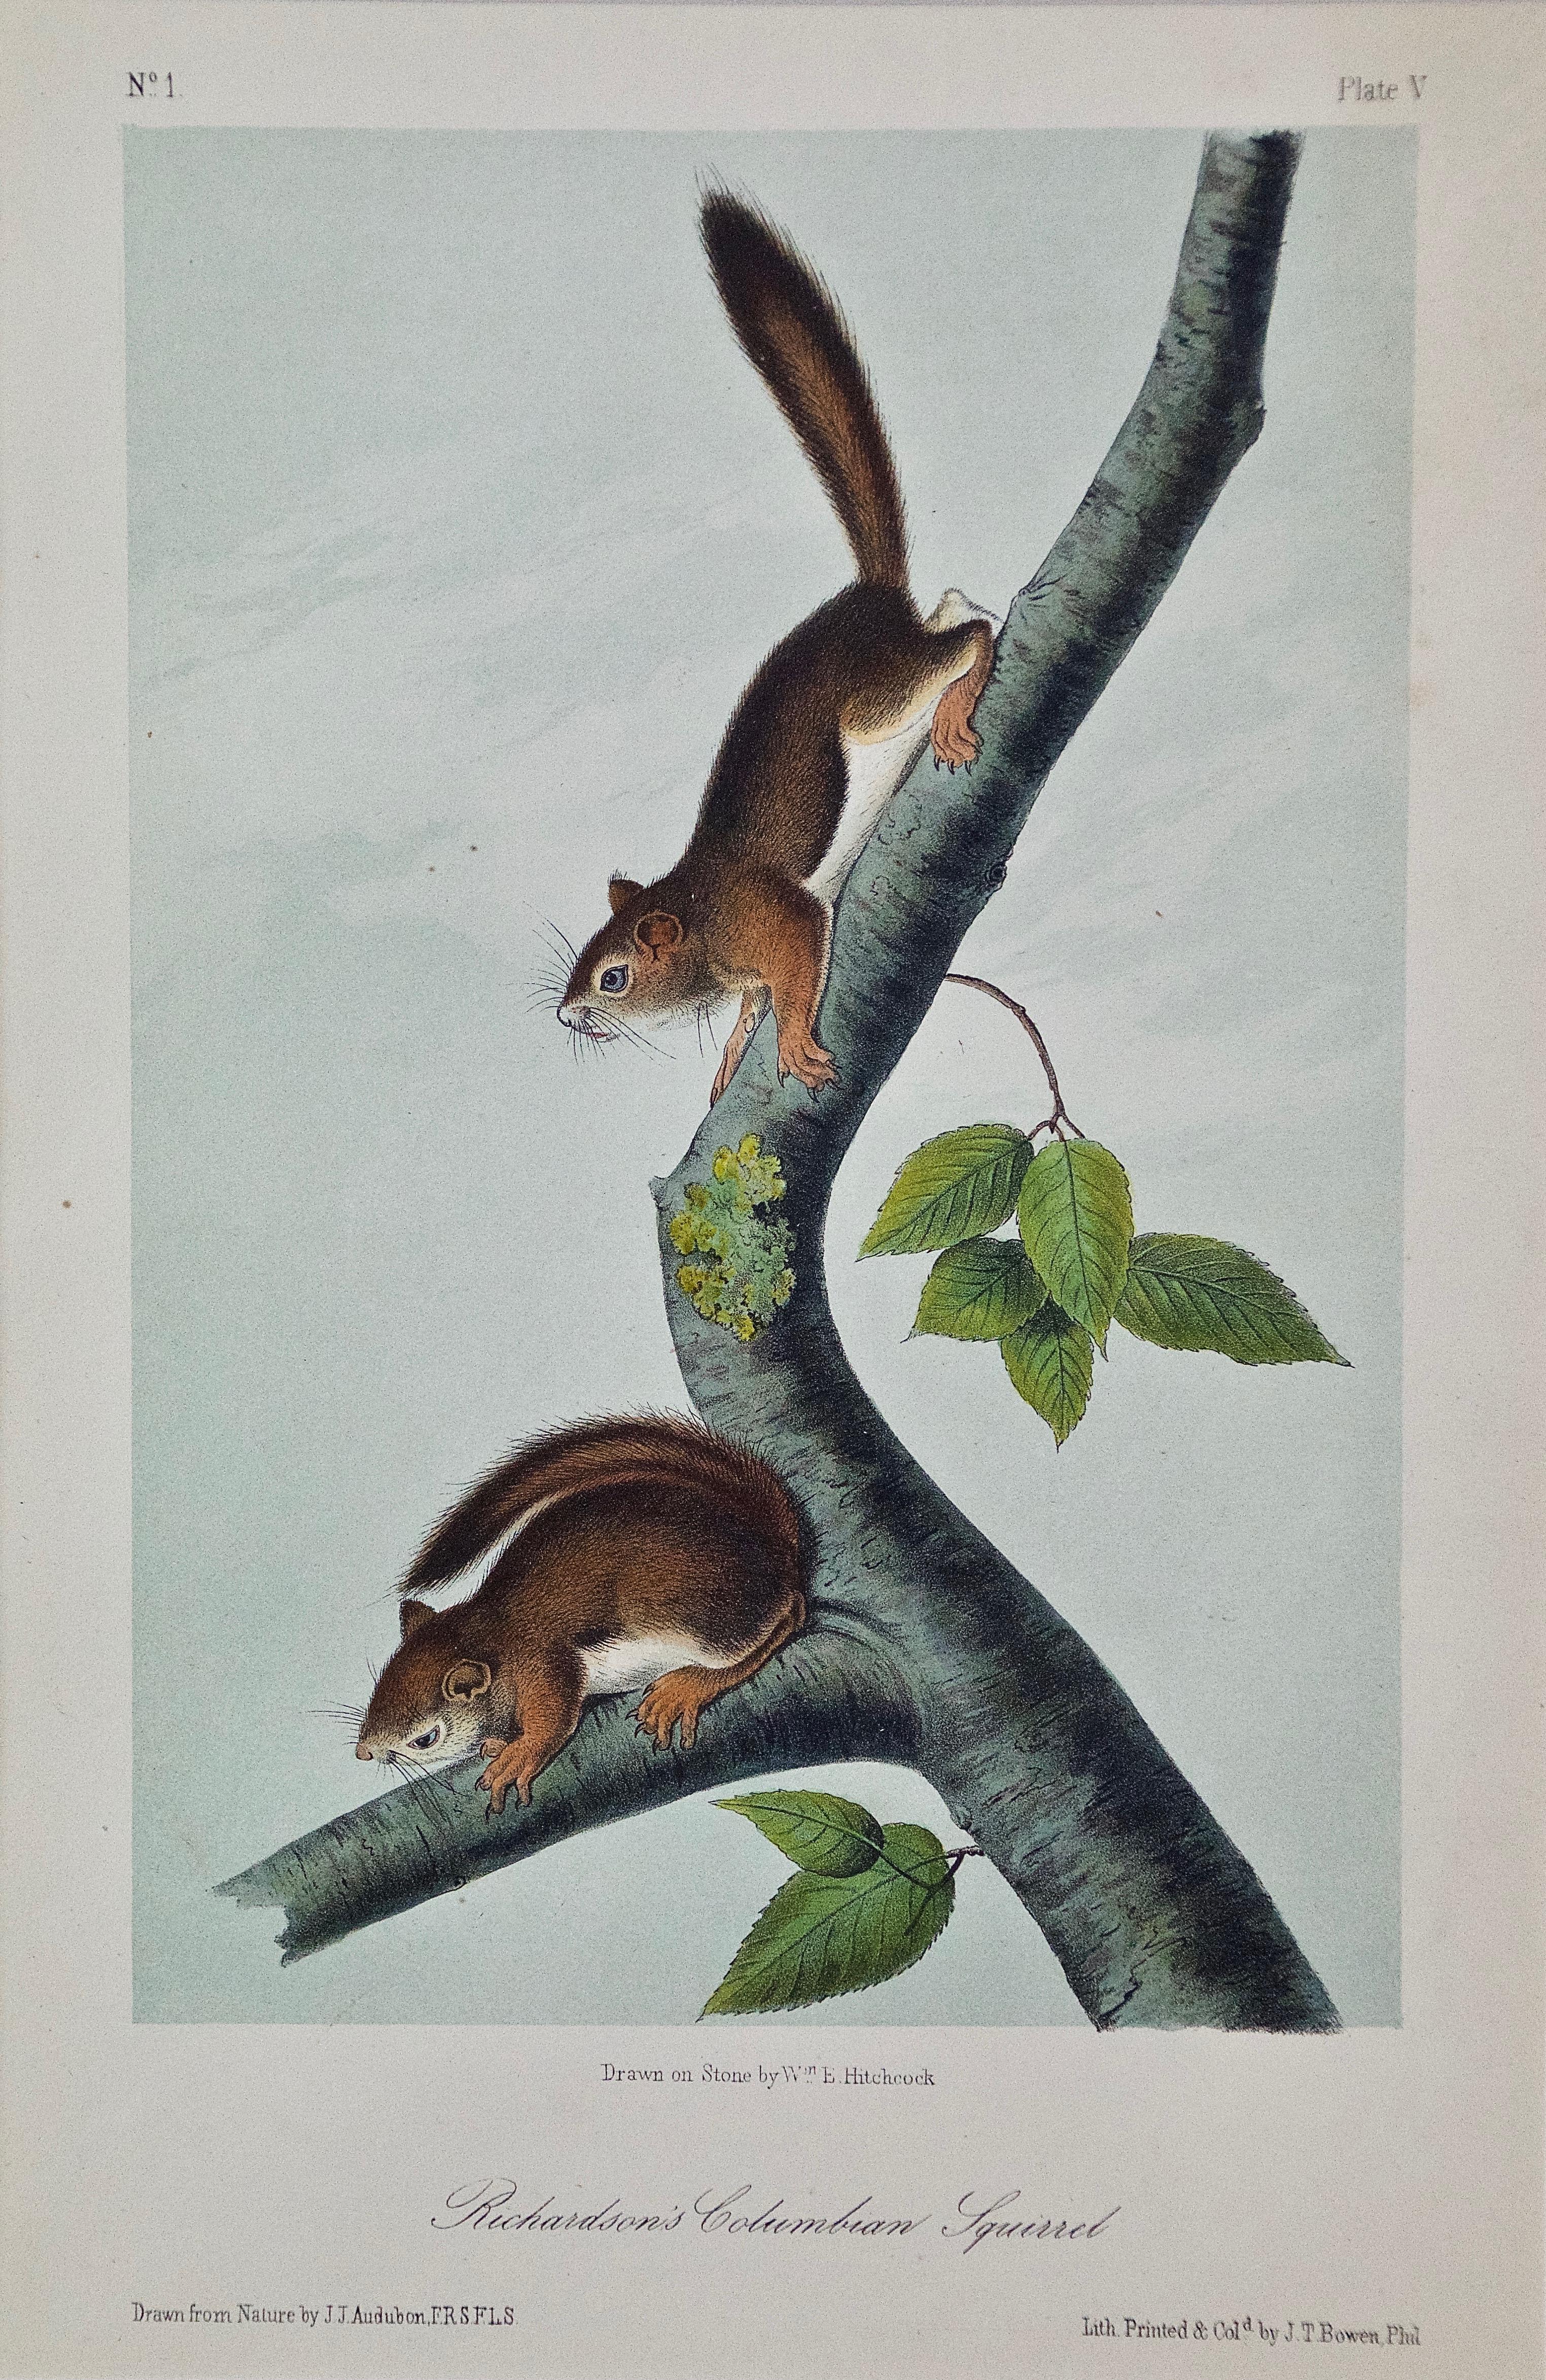 John James Audubon Animal Print - Original Audubon Hand Colored Lithograph of a "Richardson's Columbian Squirrel"